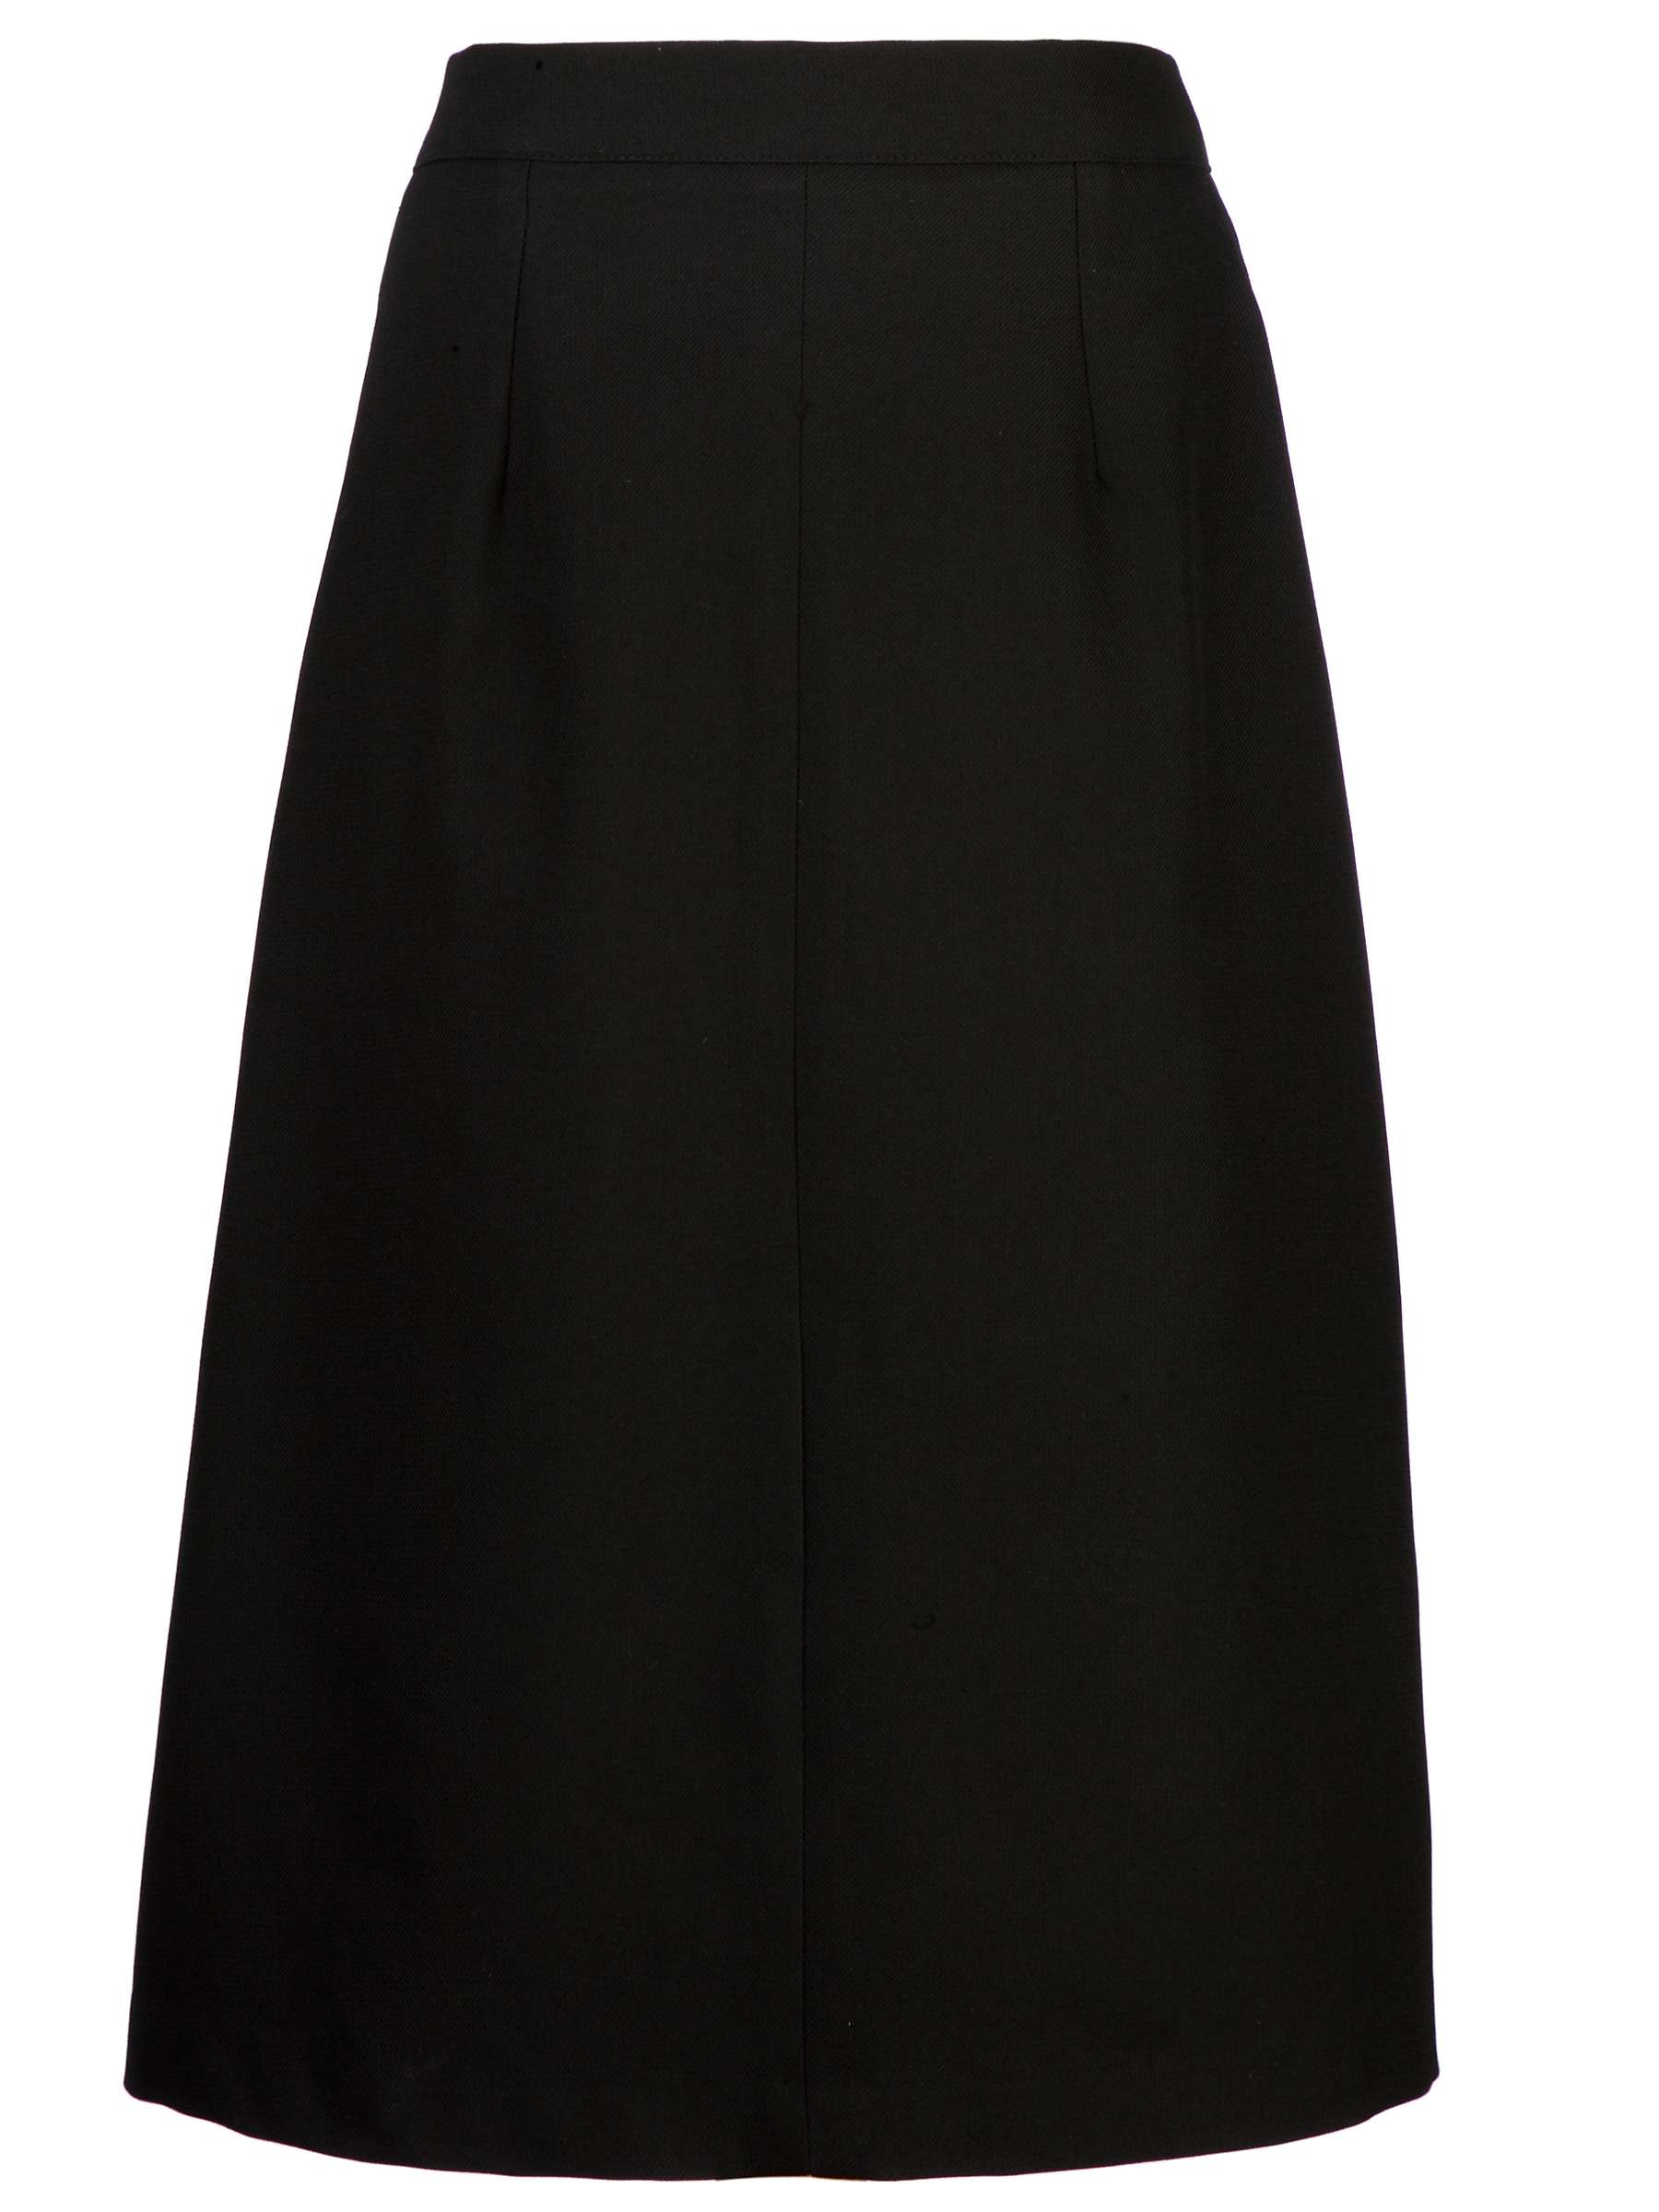 Buy Girls' School A-Line Skirt, Black Online at johnlewis.com